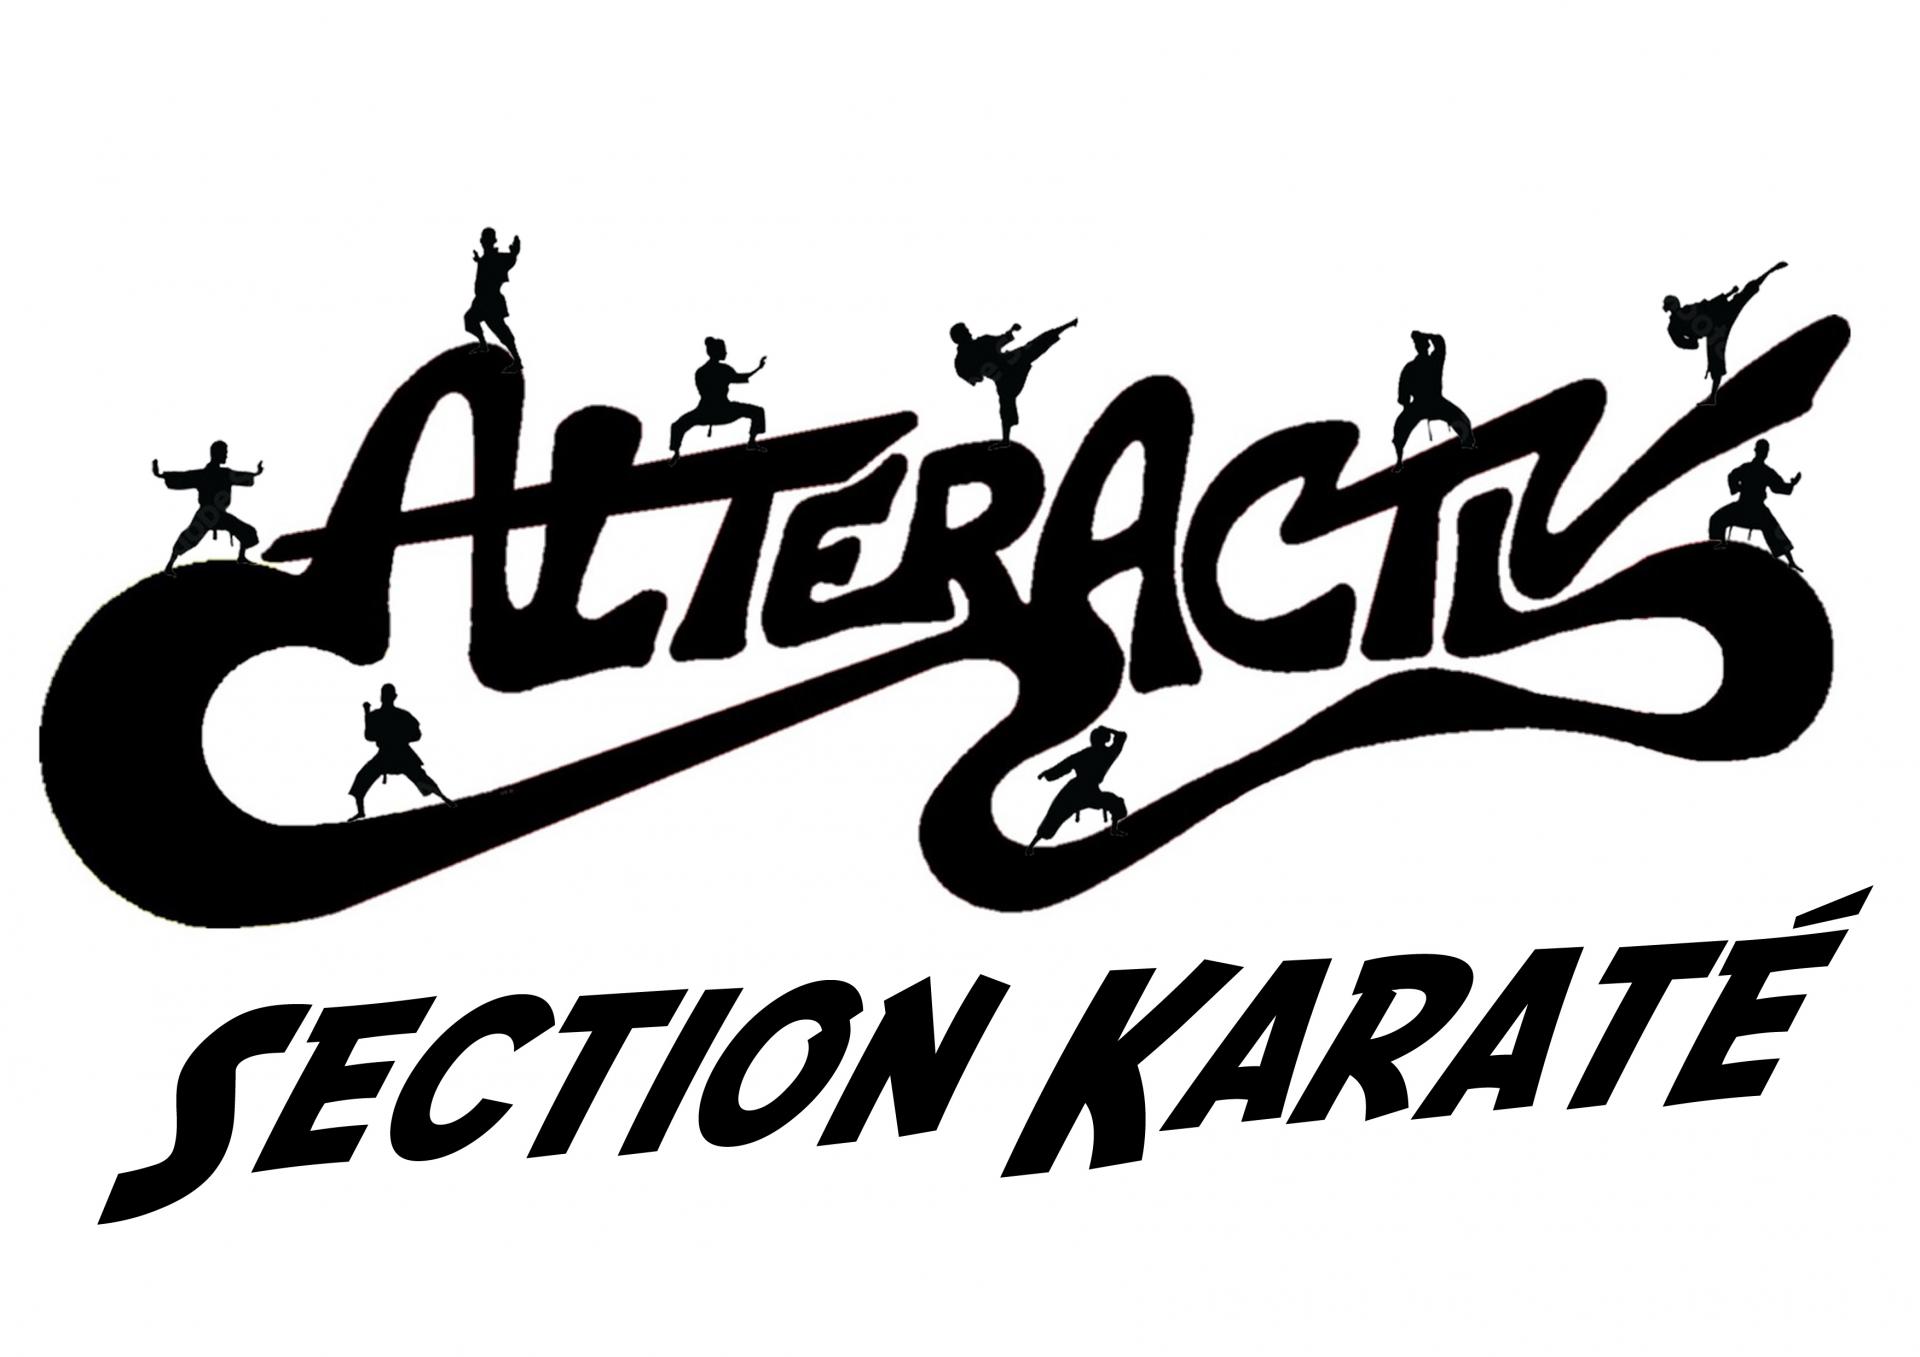 Alteractiv section karate logo